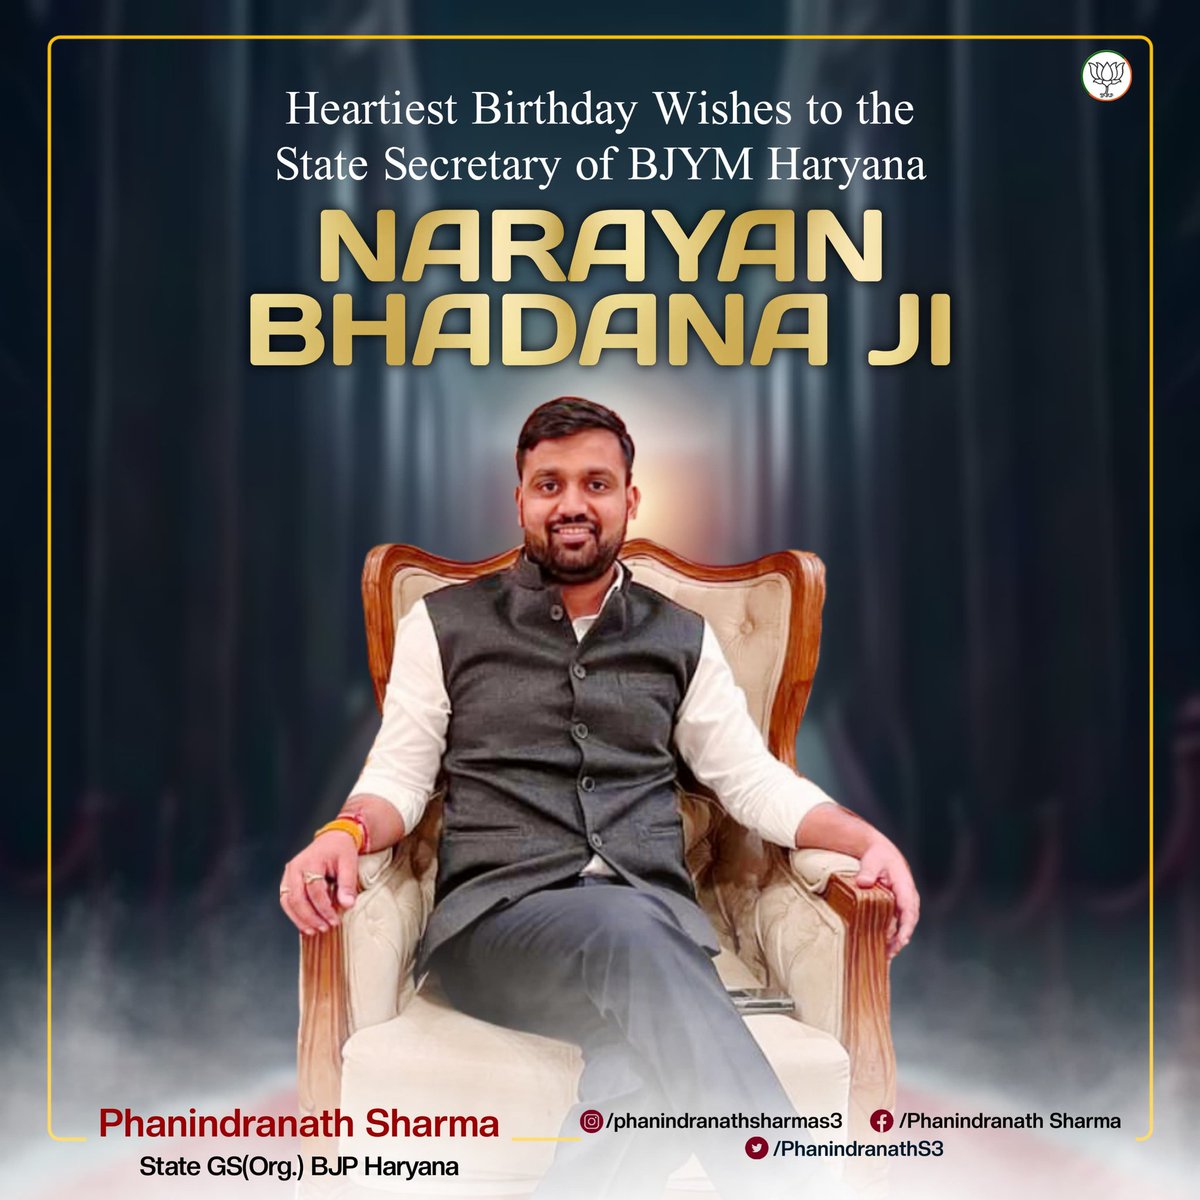 Warmest Birthday wishes to the State Secretary of BJYM Haryana Narayan Bhadana ji. May Maa Kamakhya bless you with good health.